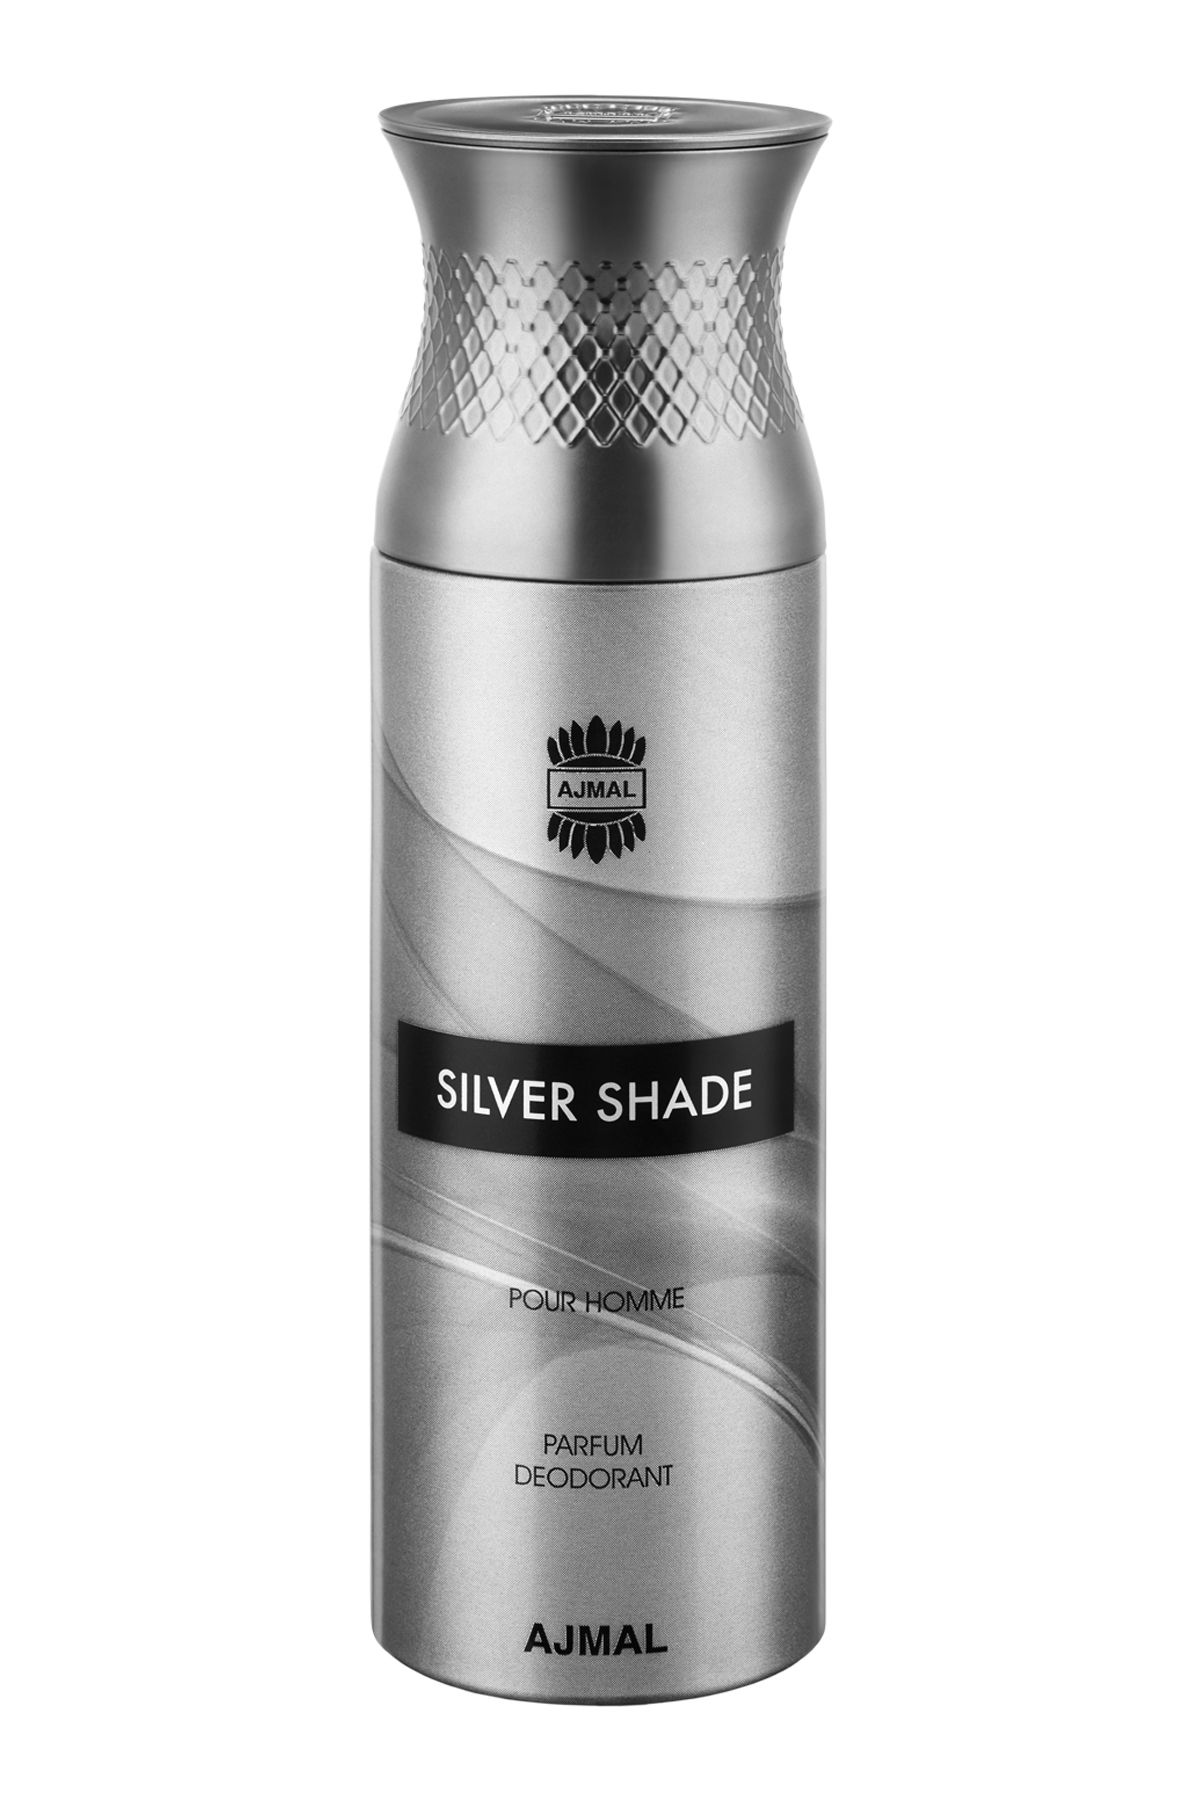 Ajmal Silver Shade Parfum Deodarant For Men